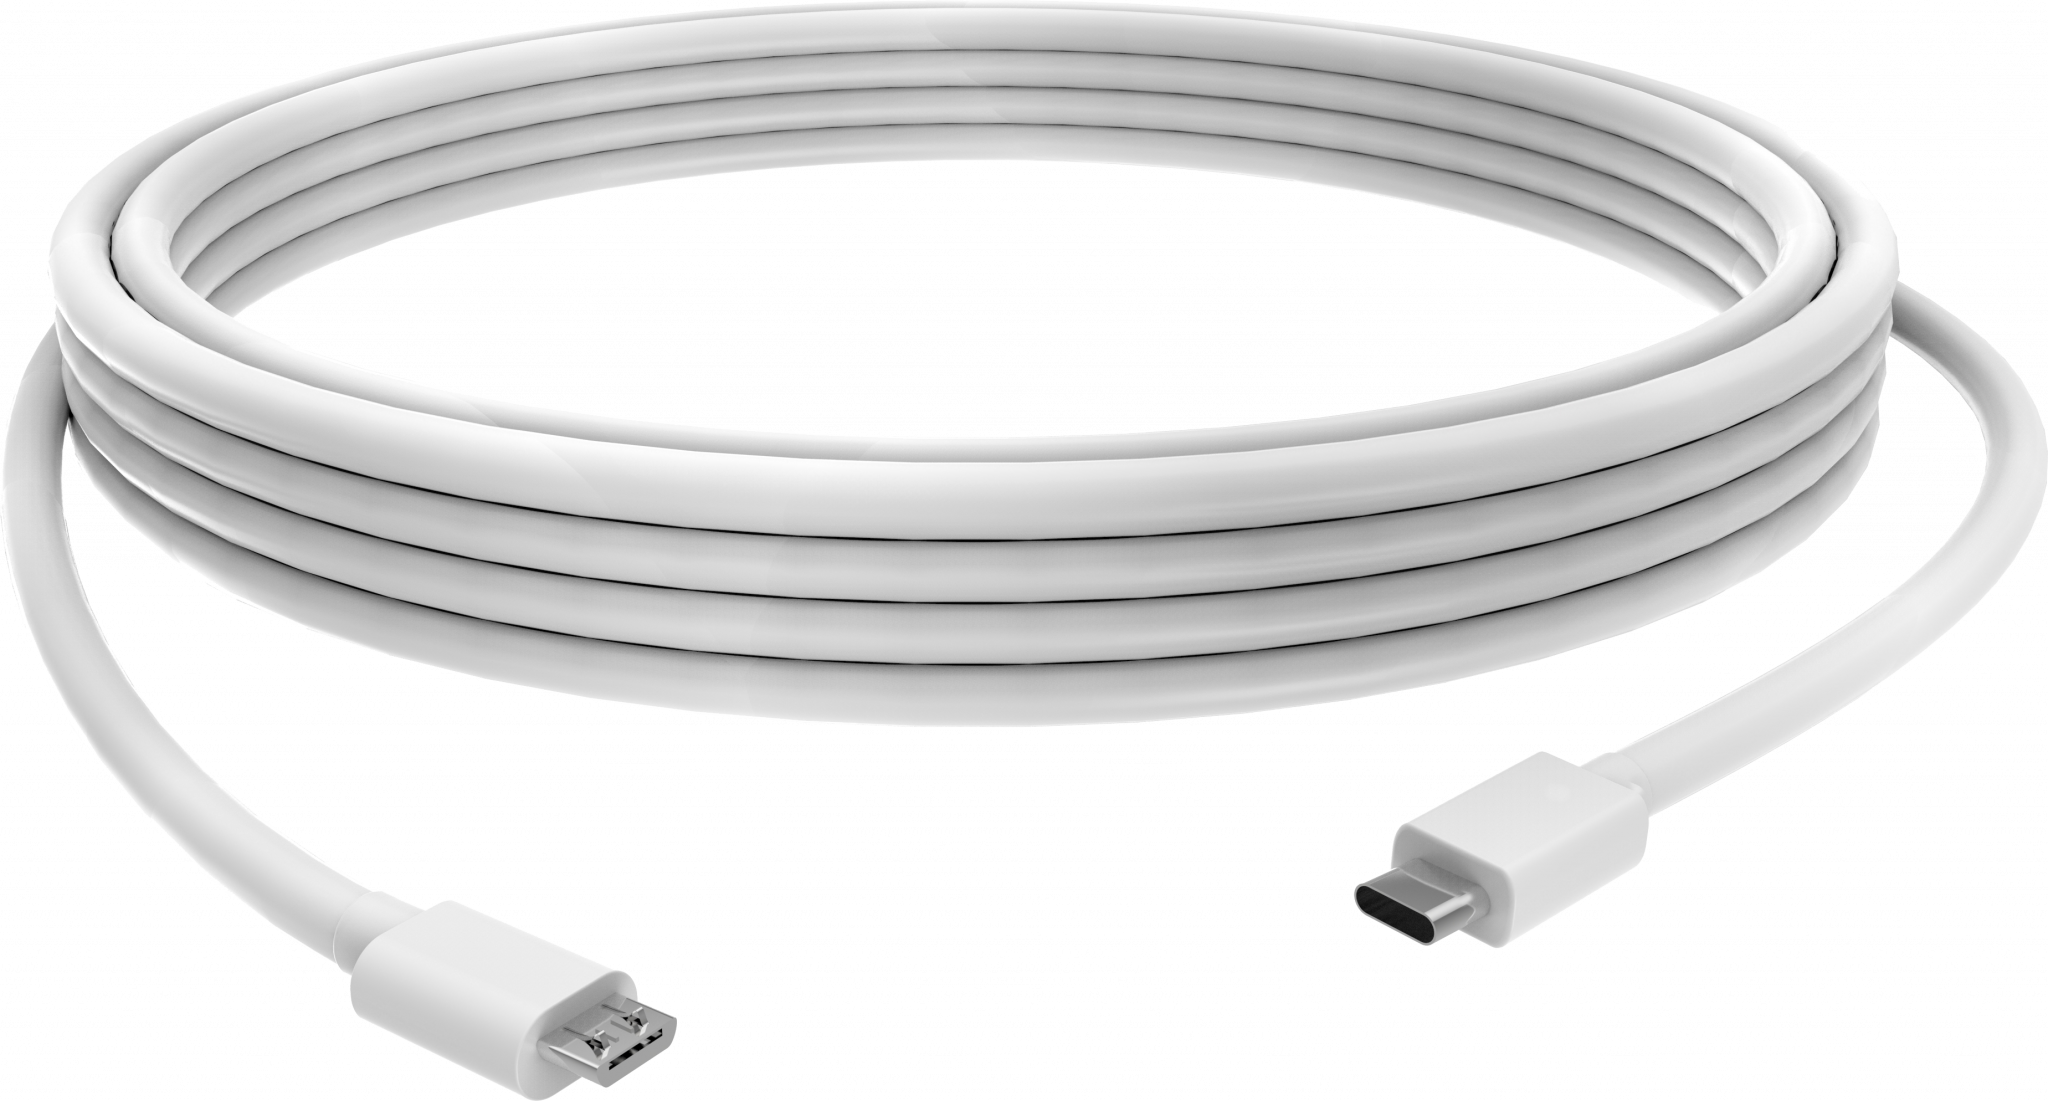 Pro c кабель. USB кабель Case-32d Micro. Белый кабель микро УСБ. Кабель Type-c-Micro-USB, 0.3 М 1 шт черный DJI. Кабель USB 360 led Type-c x-Cable.